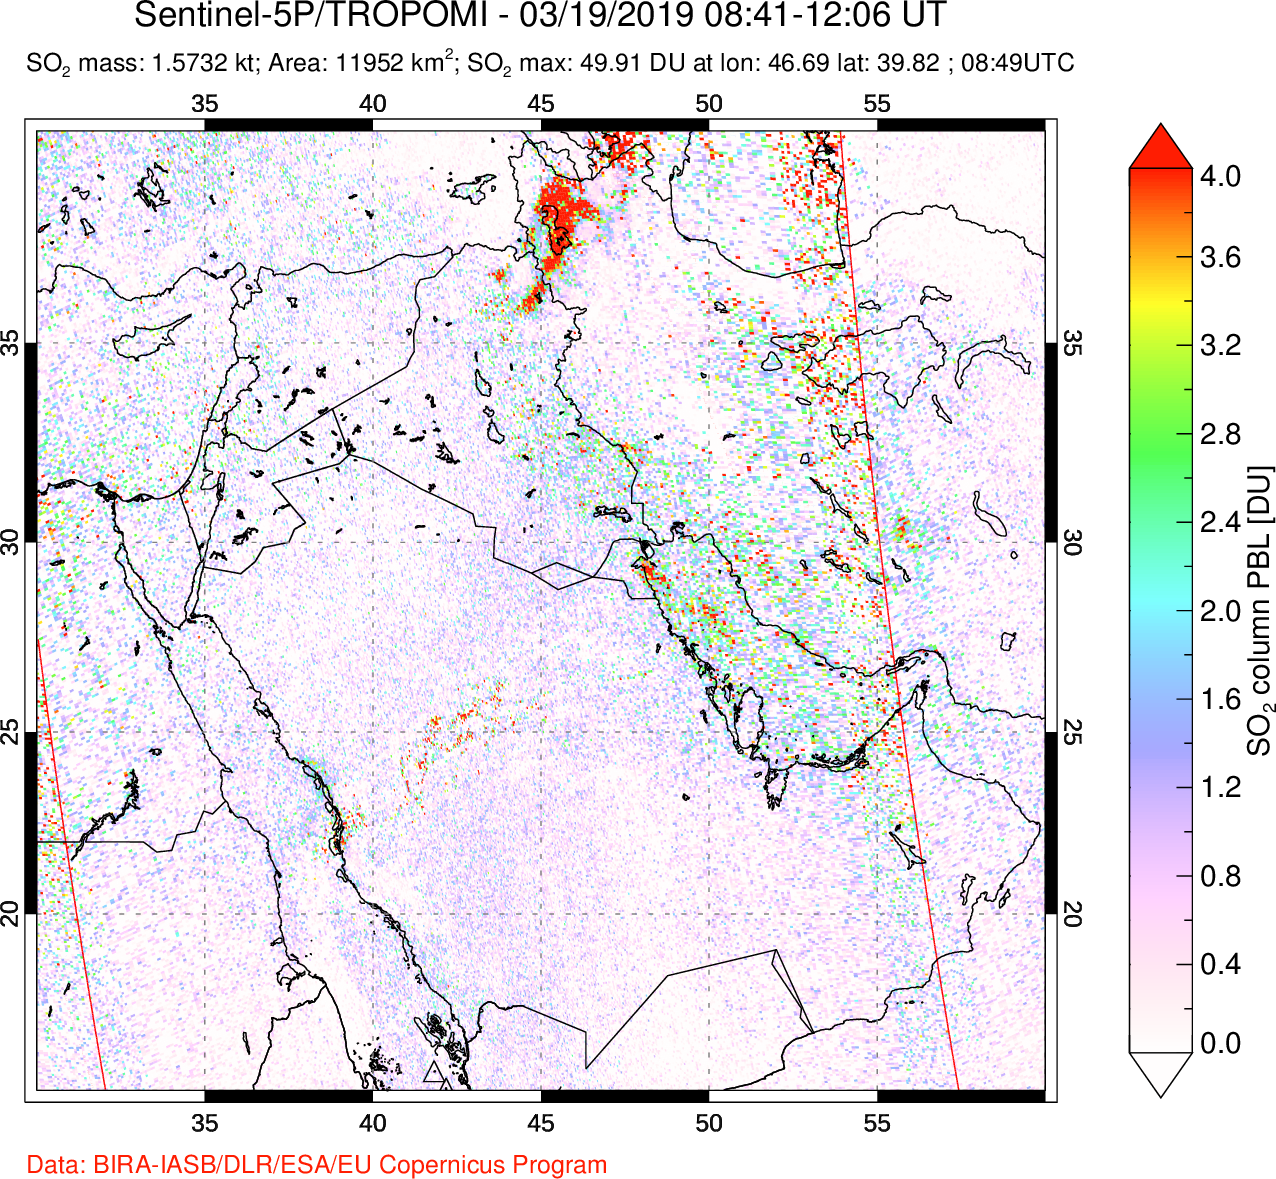 A sulfur dioxide image over Middle East on Mar 19, 2019.